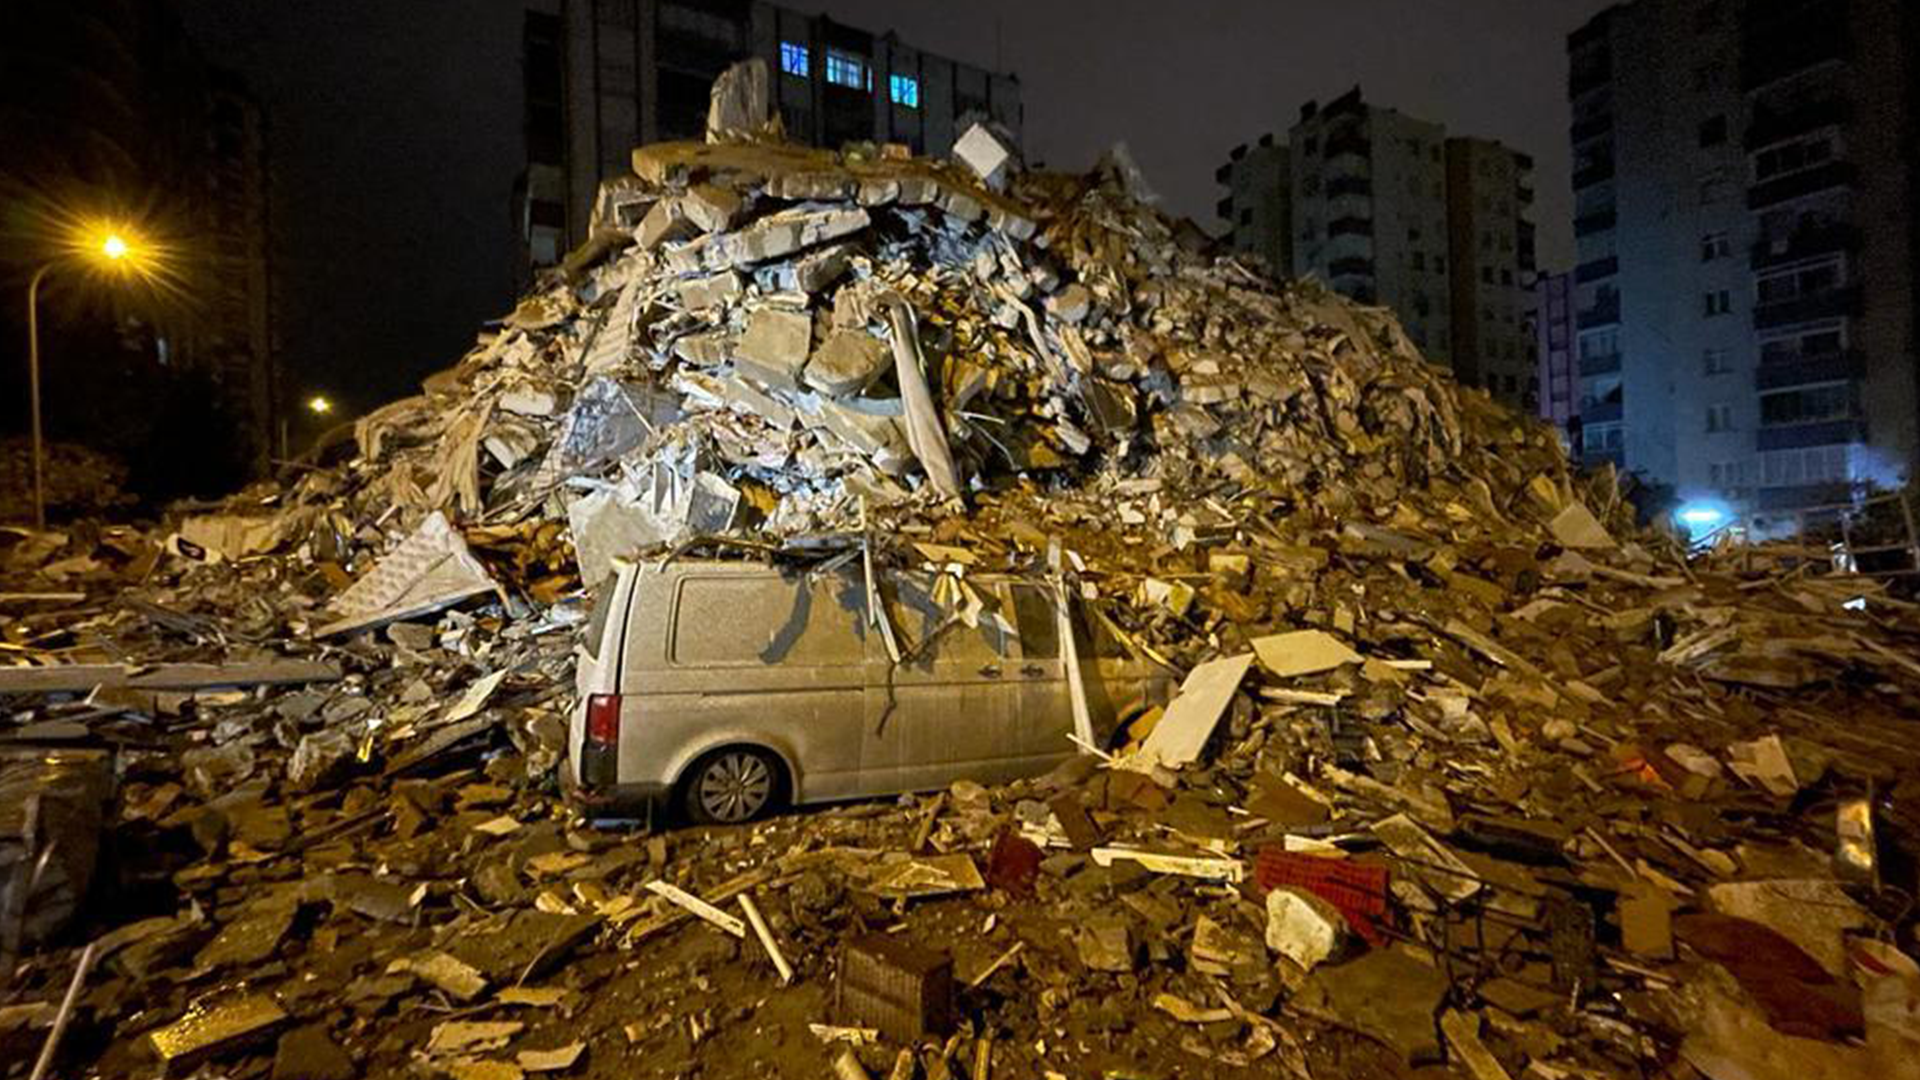 Turkey earthquake kills dozens in southern Turkey, Syria: Live updates - The Washington Post